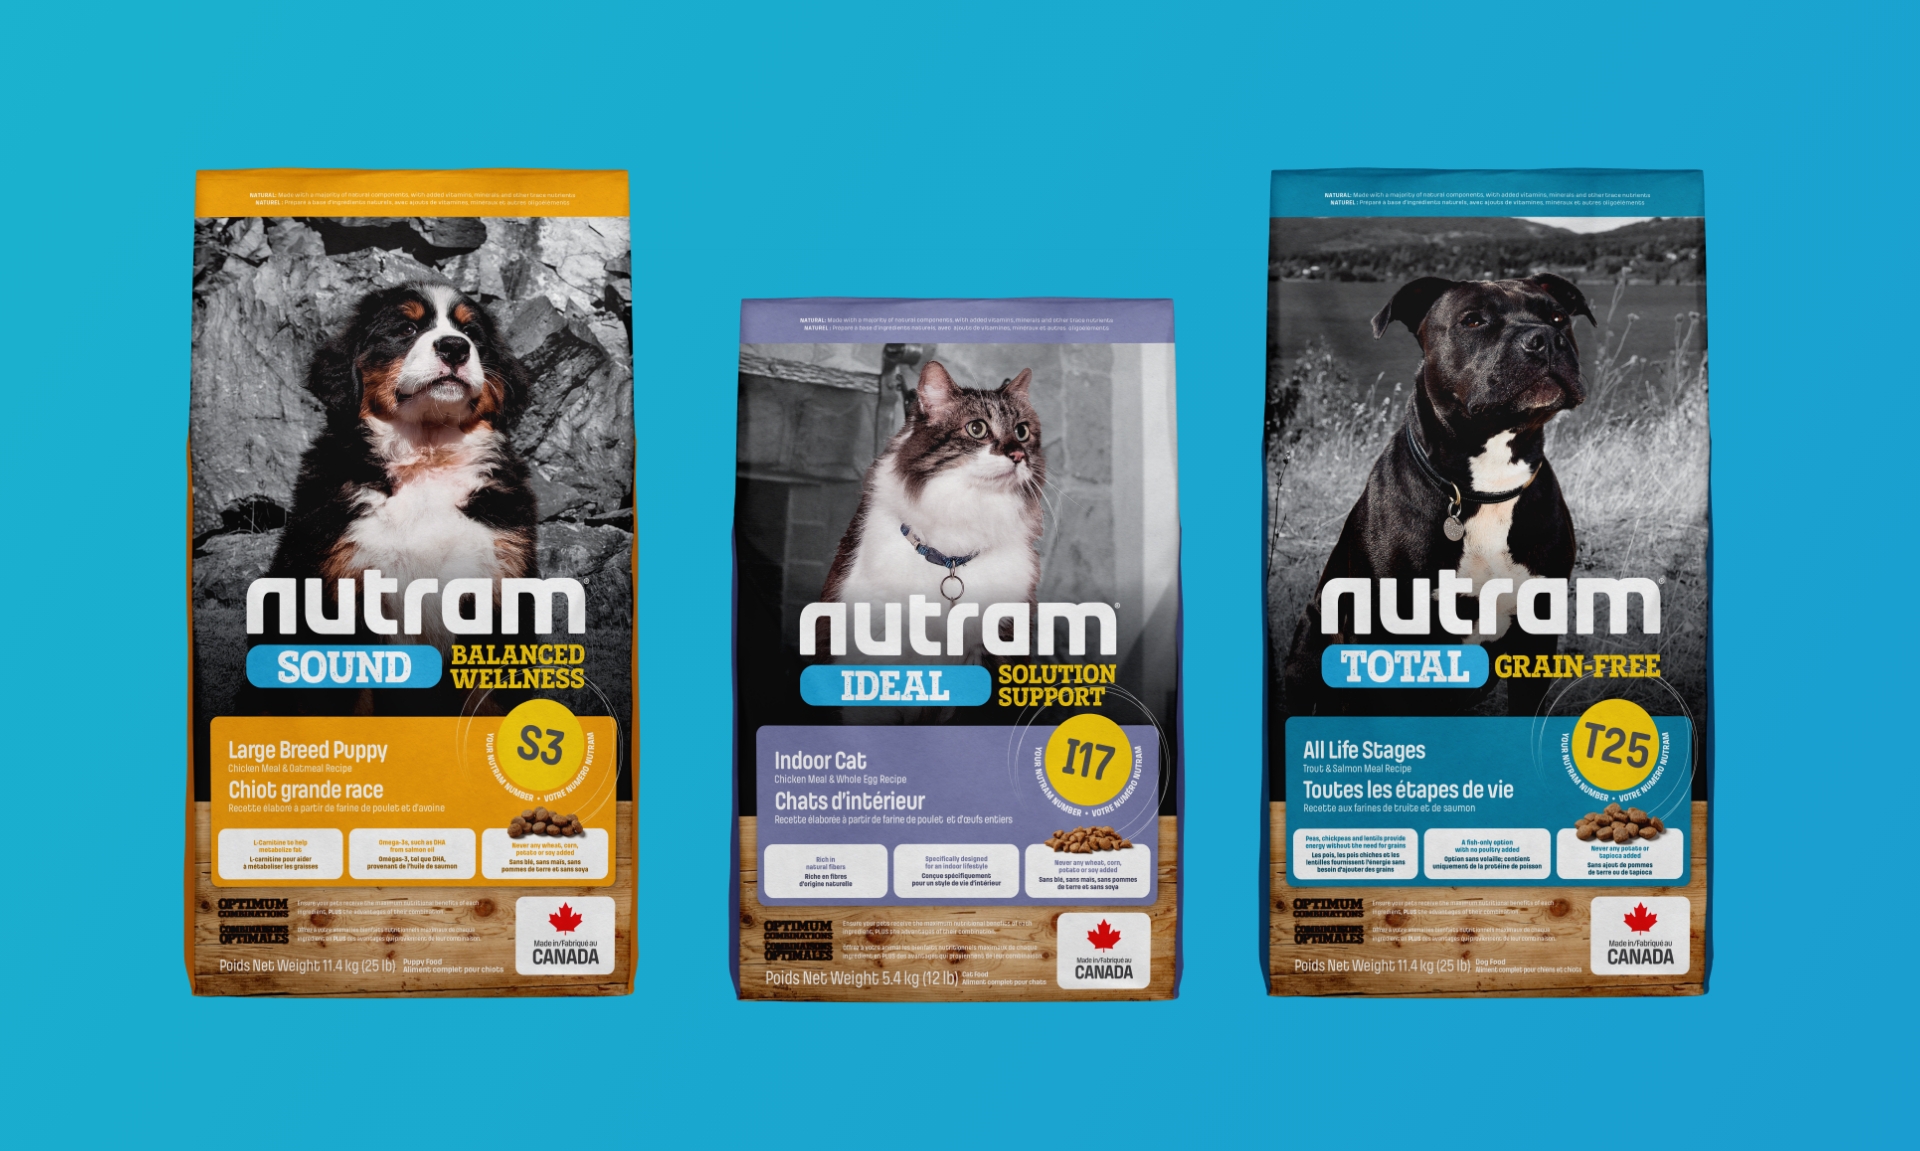 Nutram product packaging design